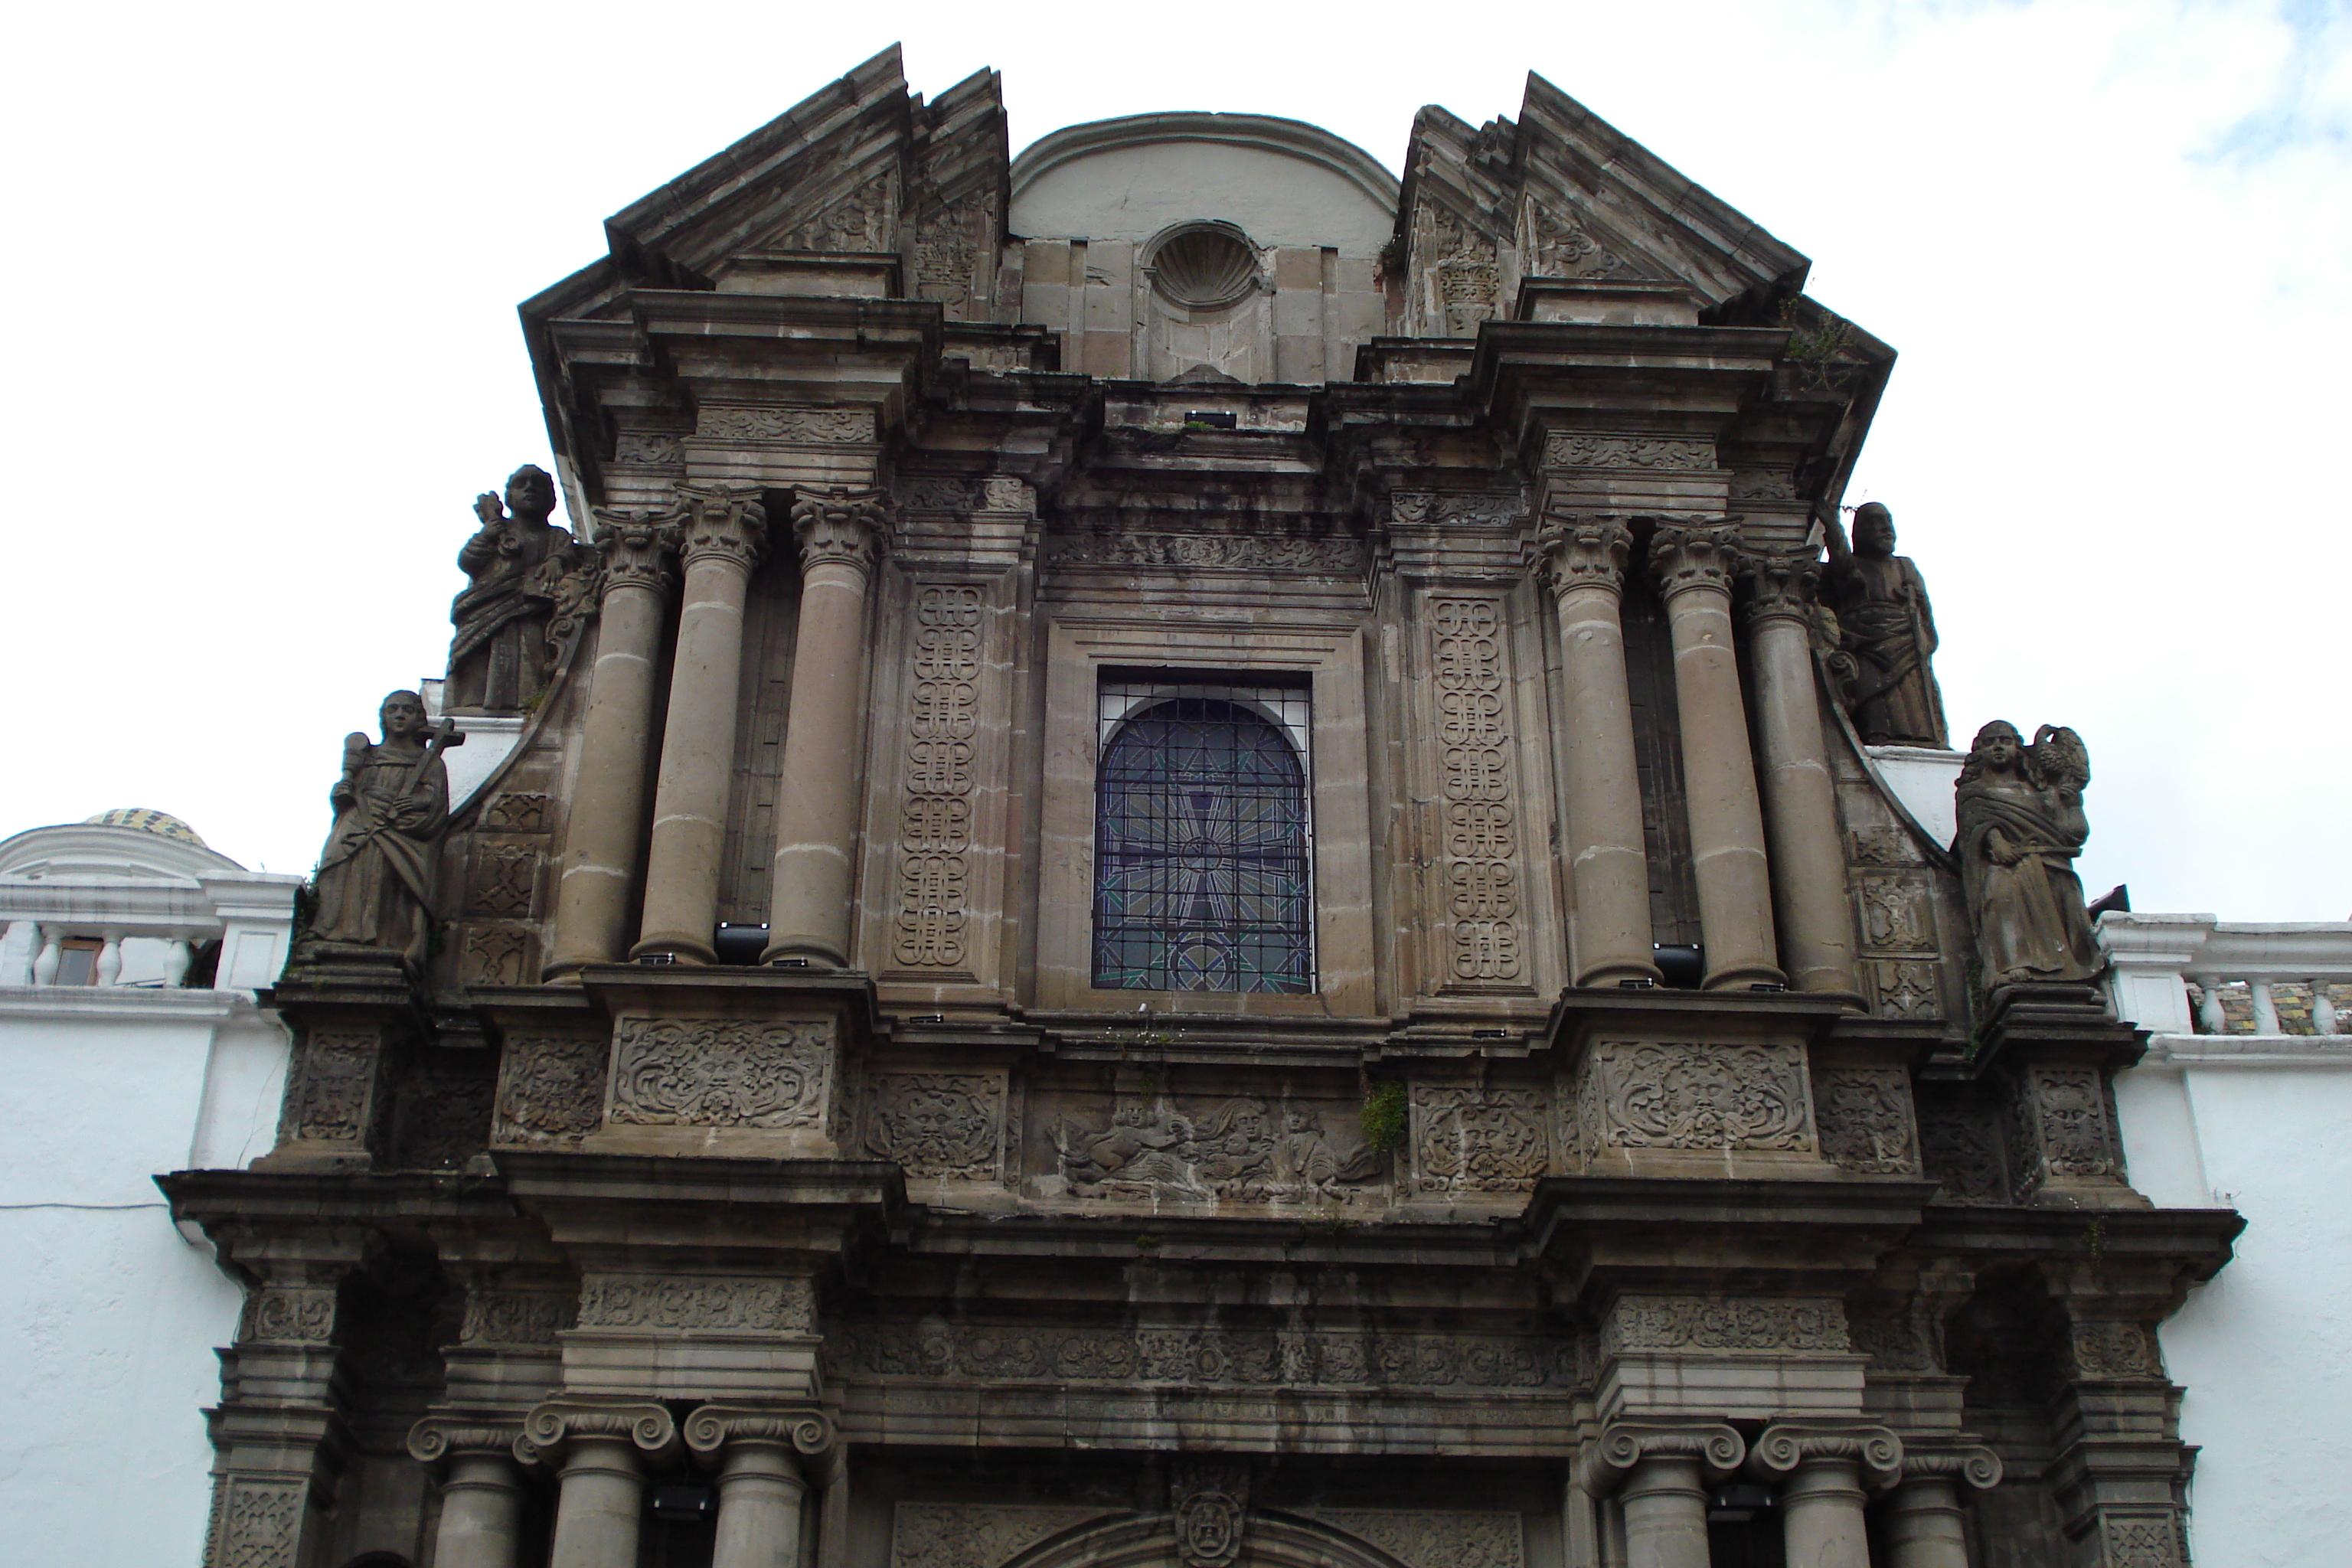 Cover image of this place El Sagrario Church